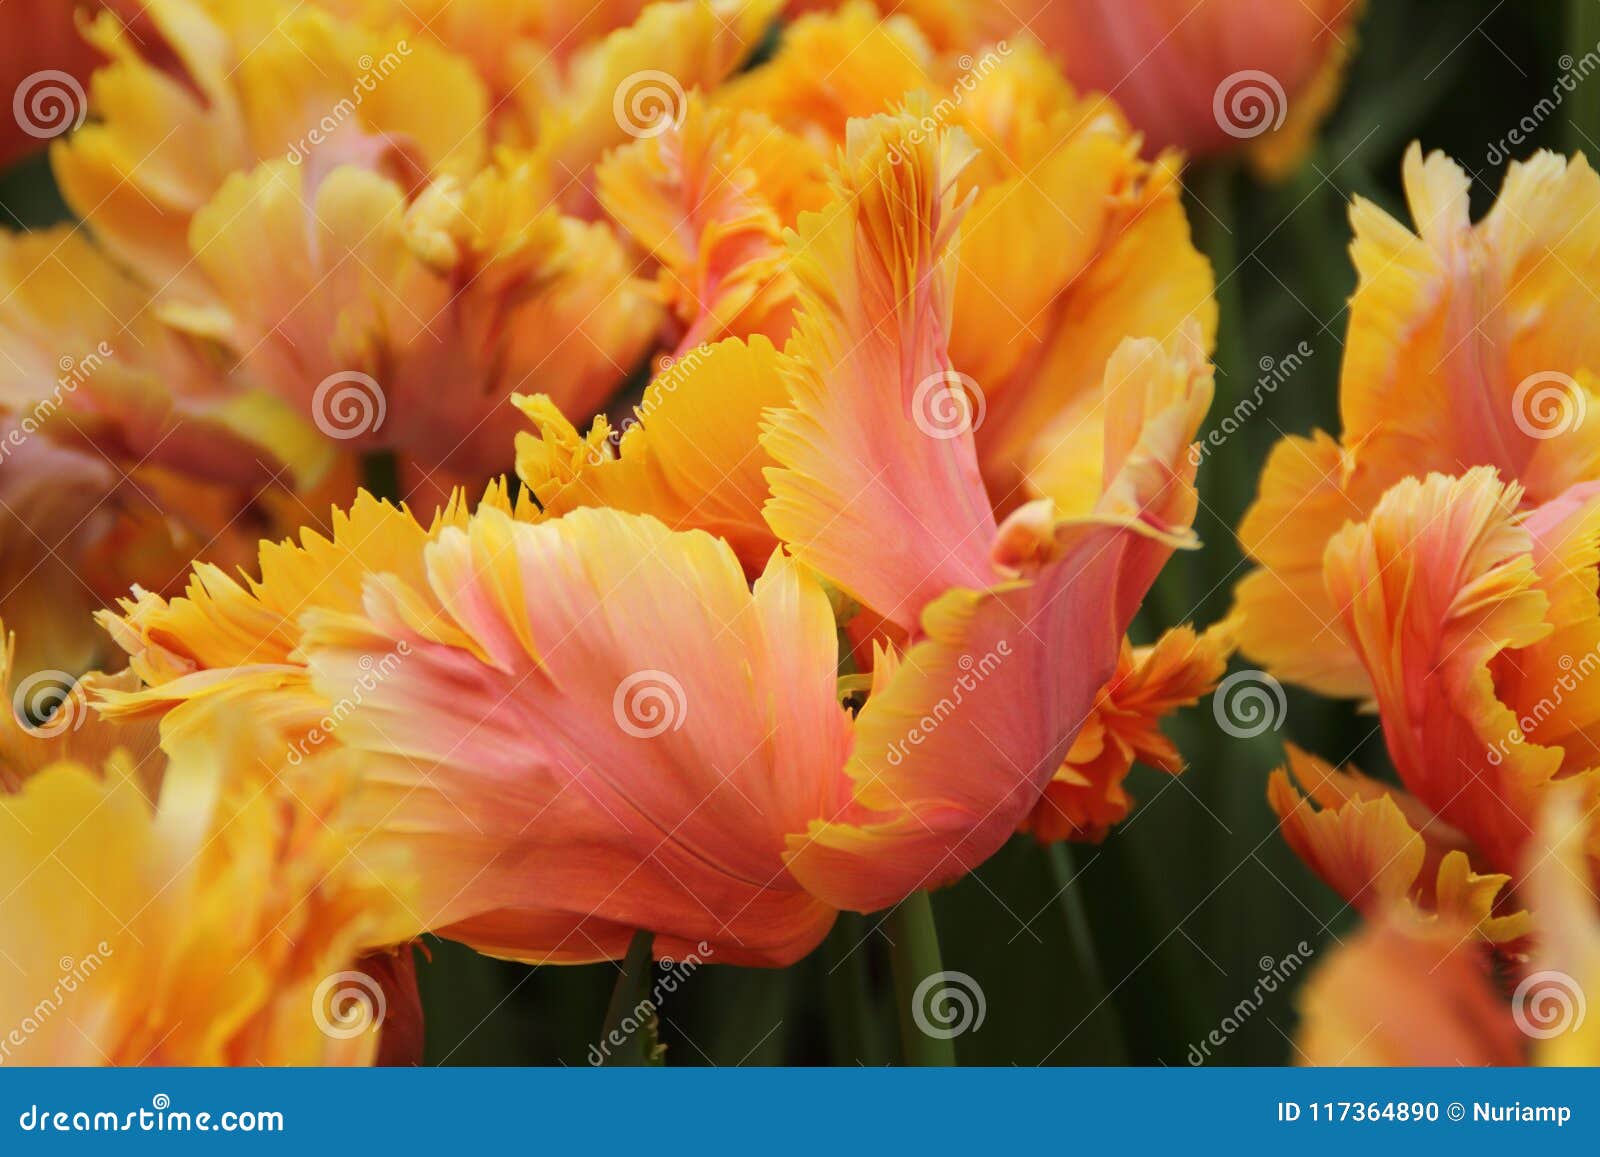 Keukenhof Gardens Tulips Macro Photo Stock Photo Image Of